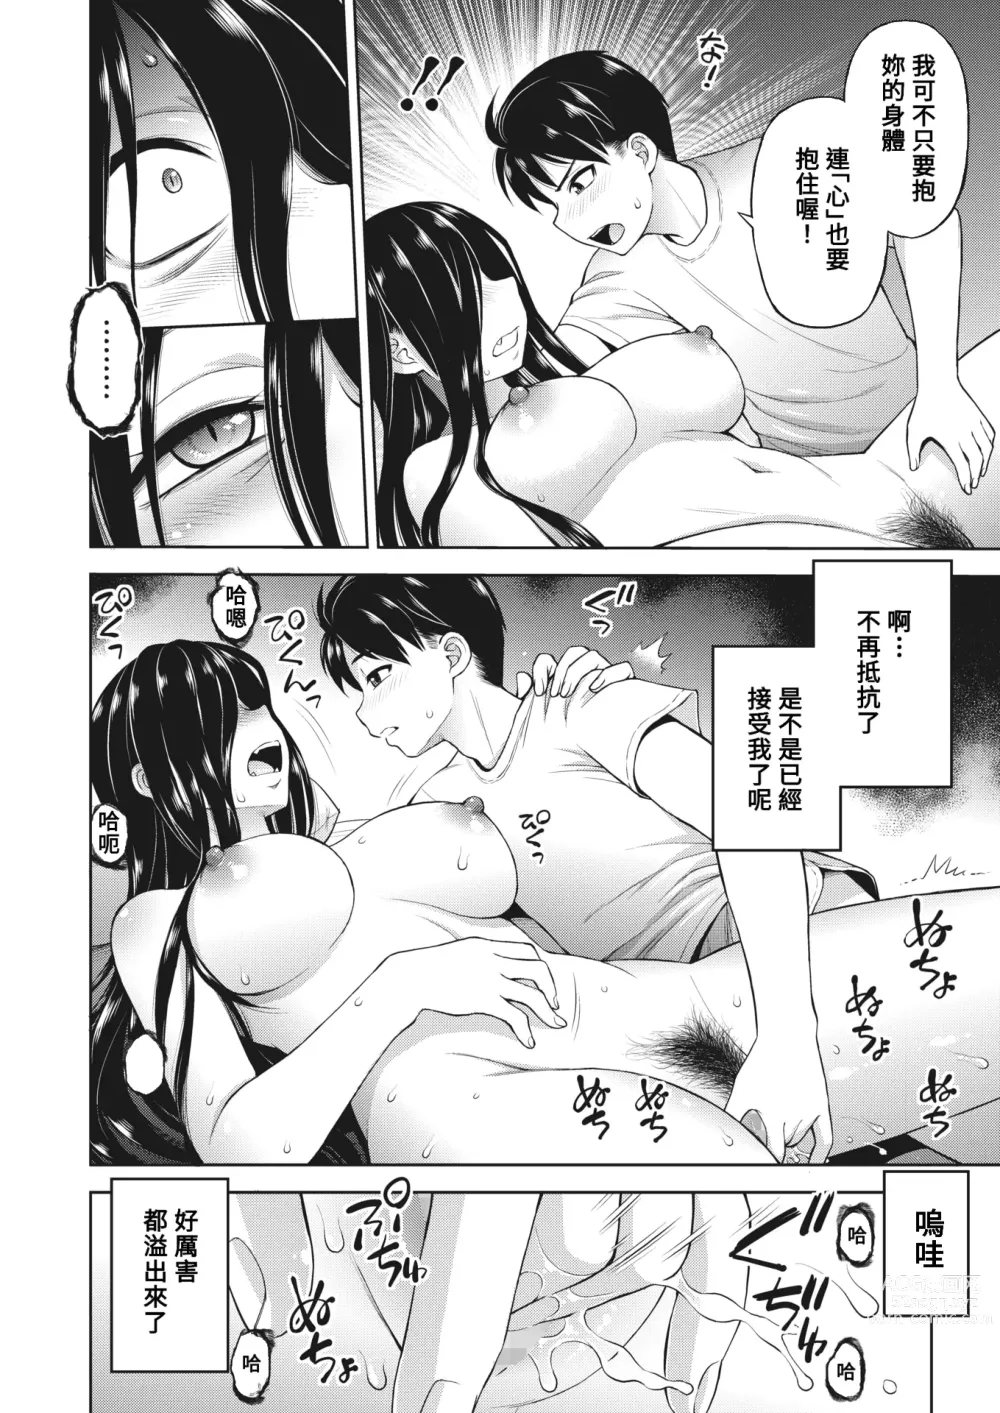 Page 12 of manga Oshiire Kaikitan